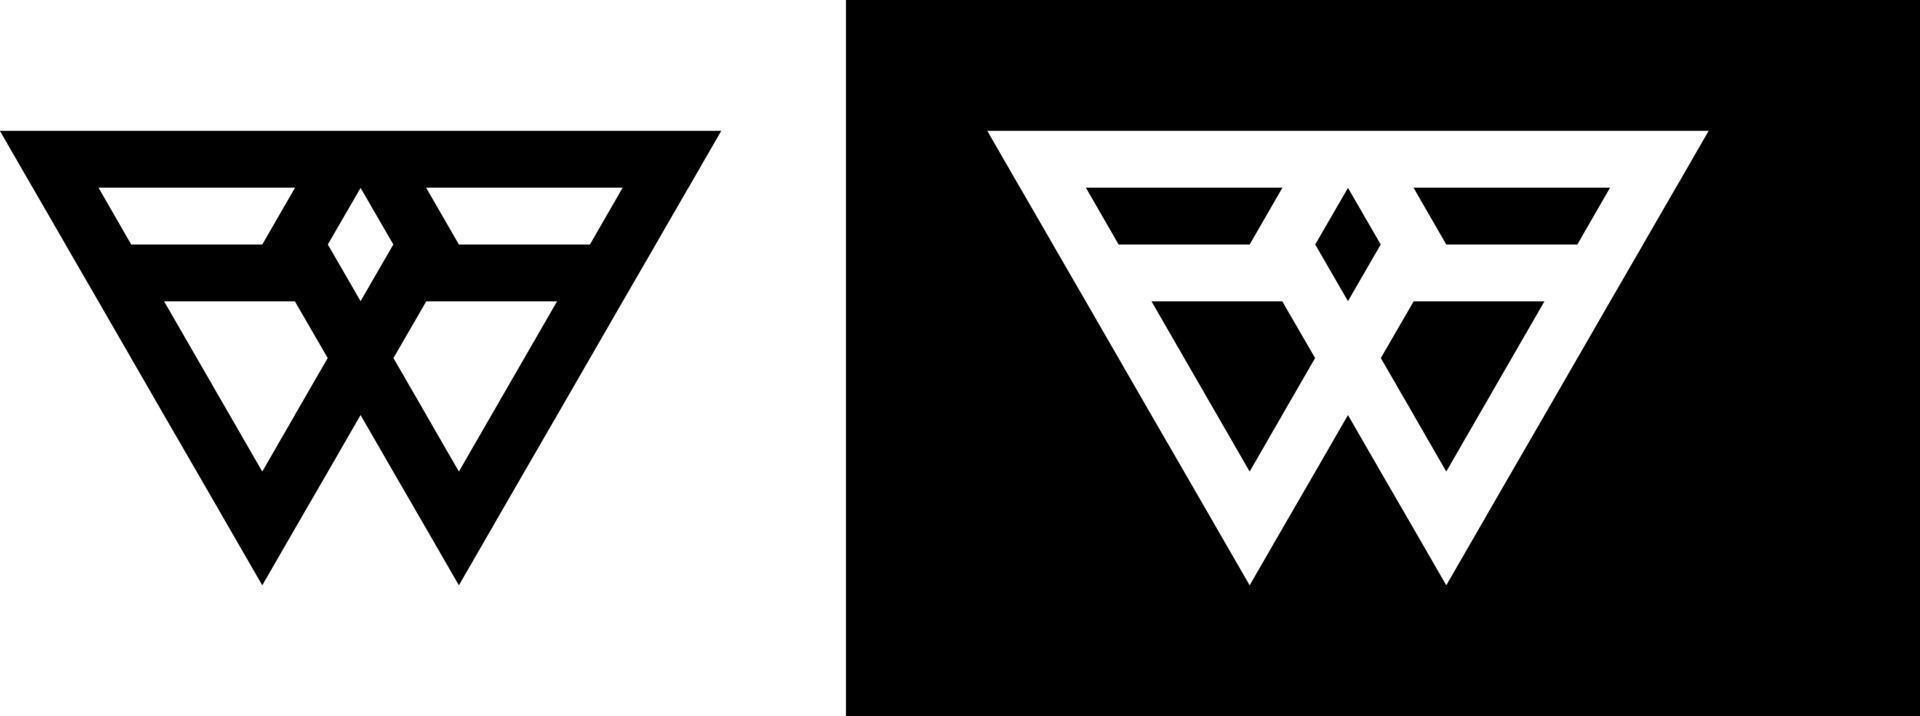 corporate letter w logo template.letter logo. vector